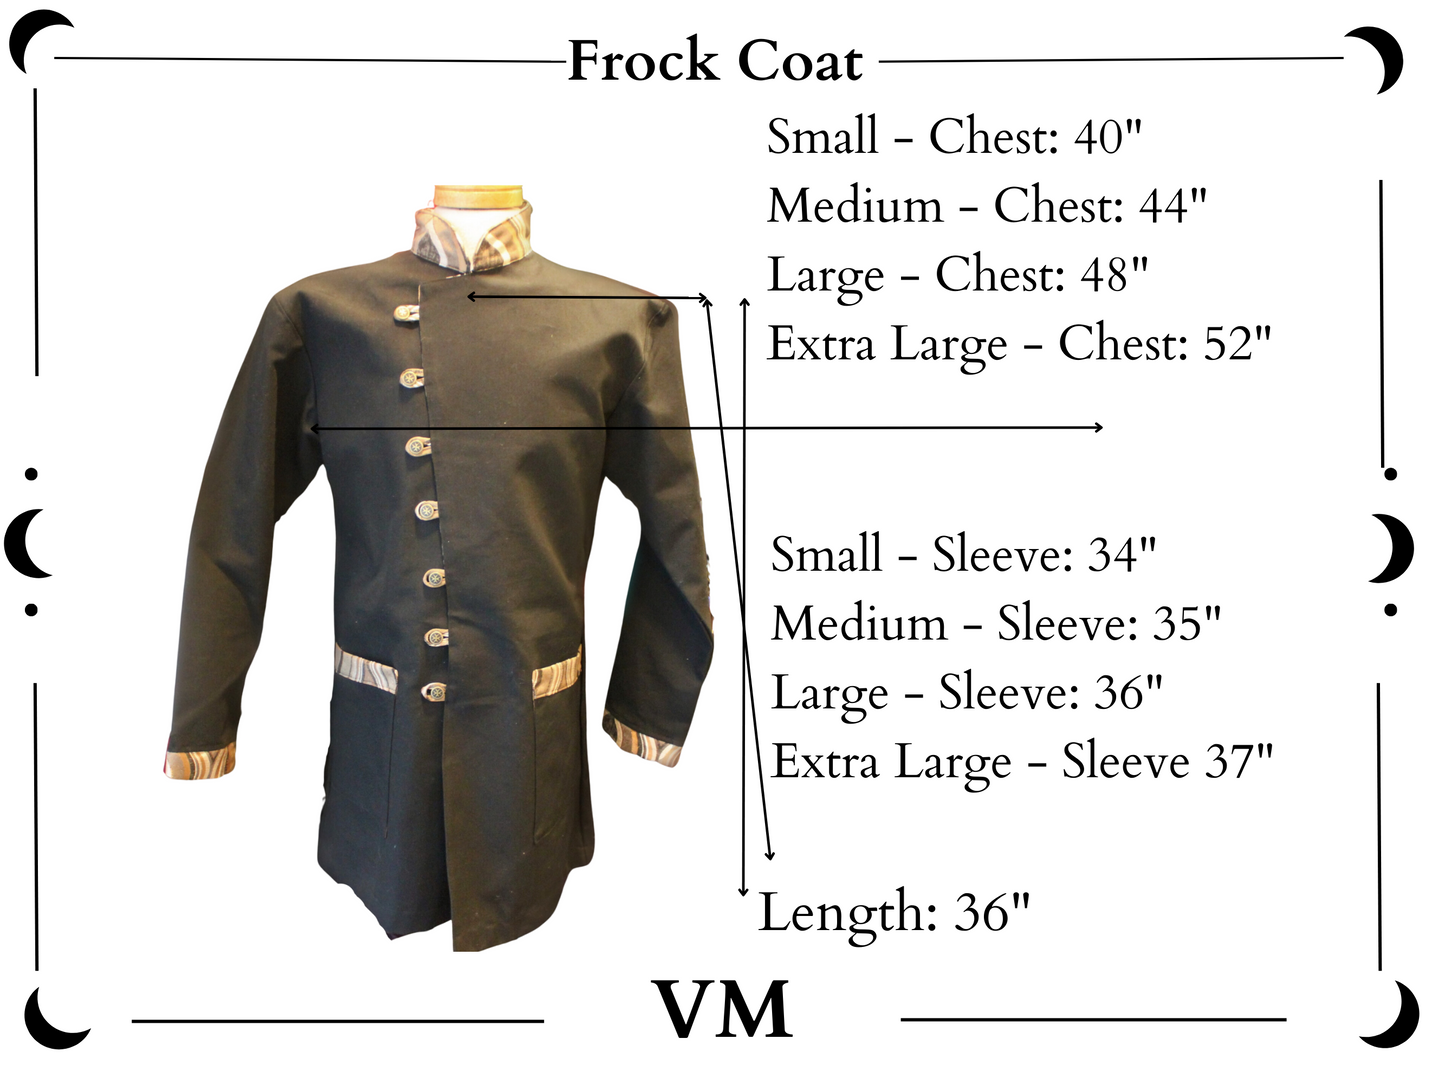 The VM Frock Coat